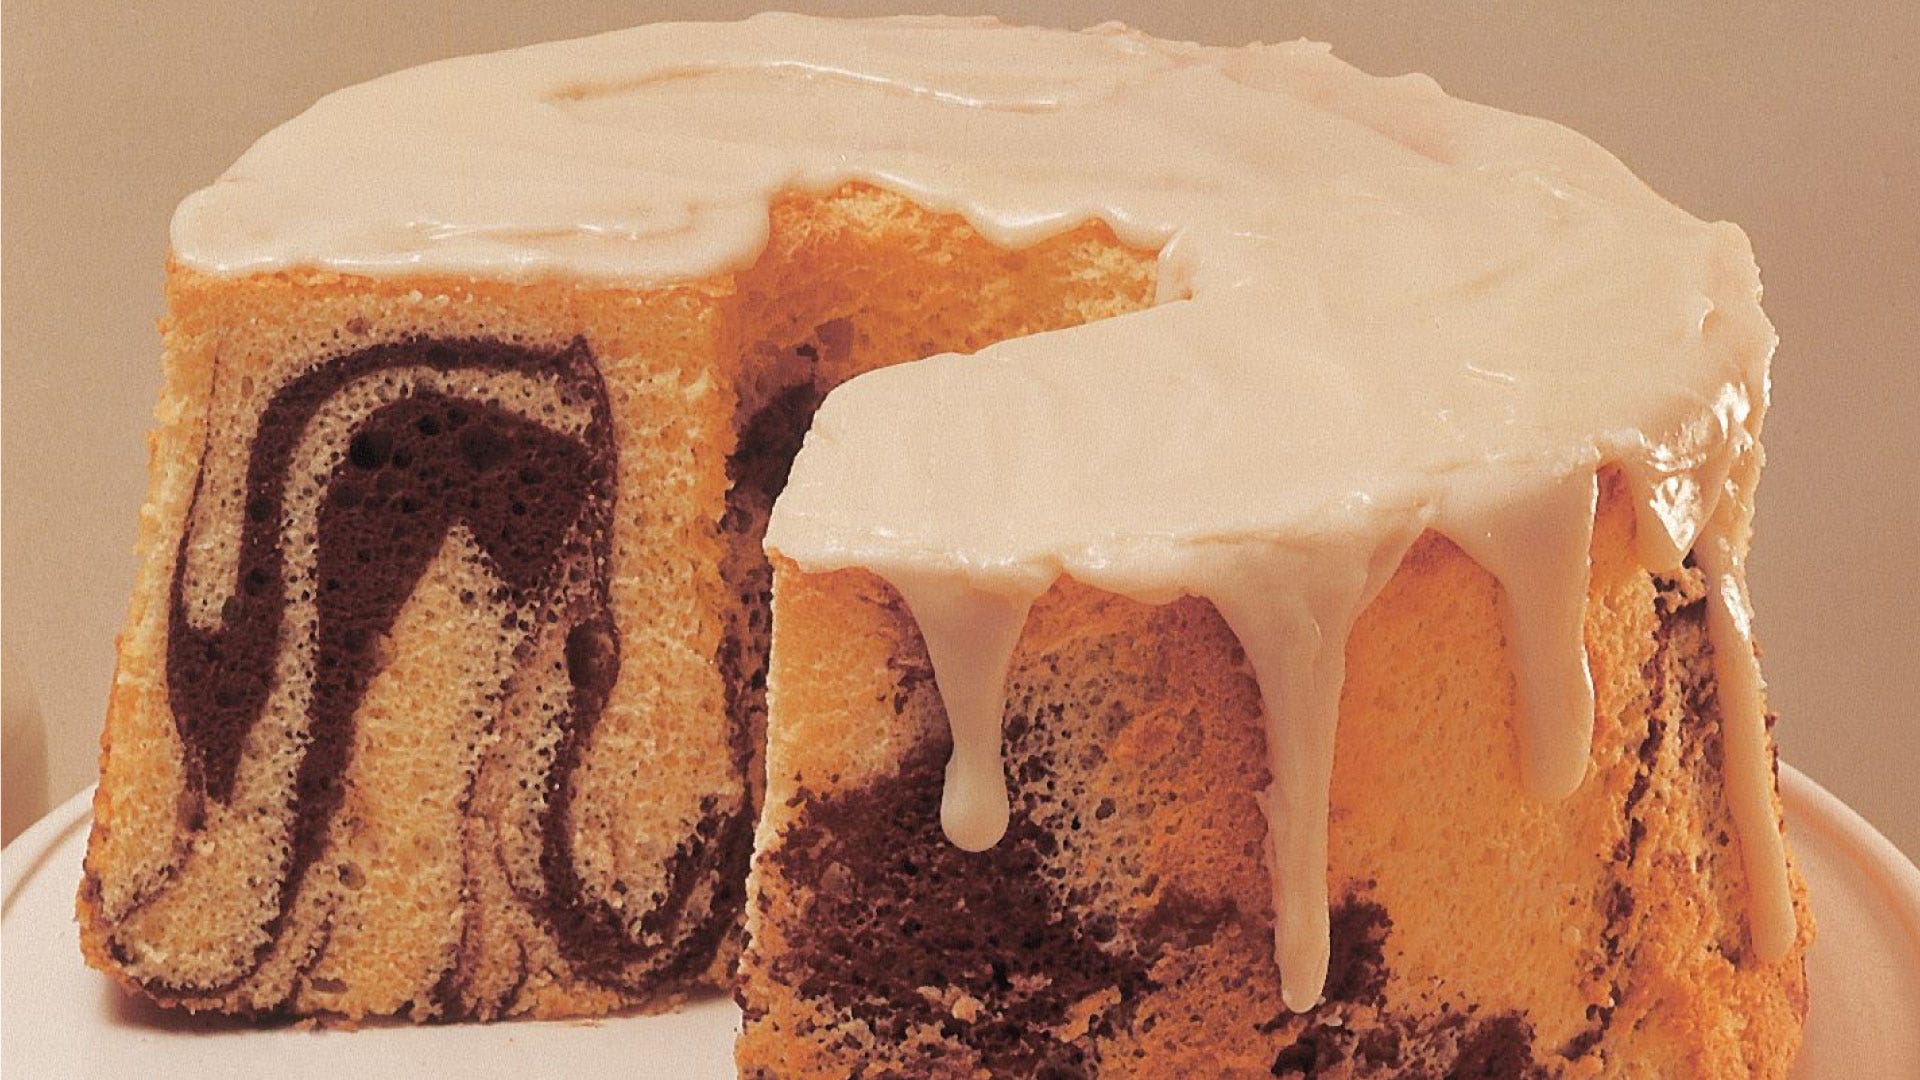 Vanilla Sponge Cake Recipe With Berries and Cream | Olive & Mango